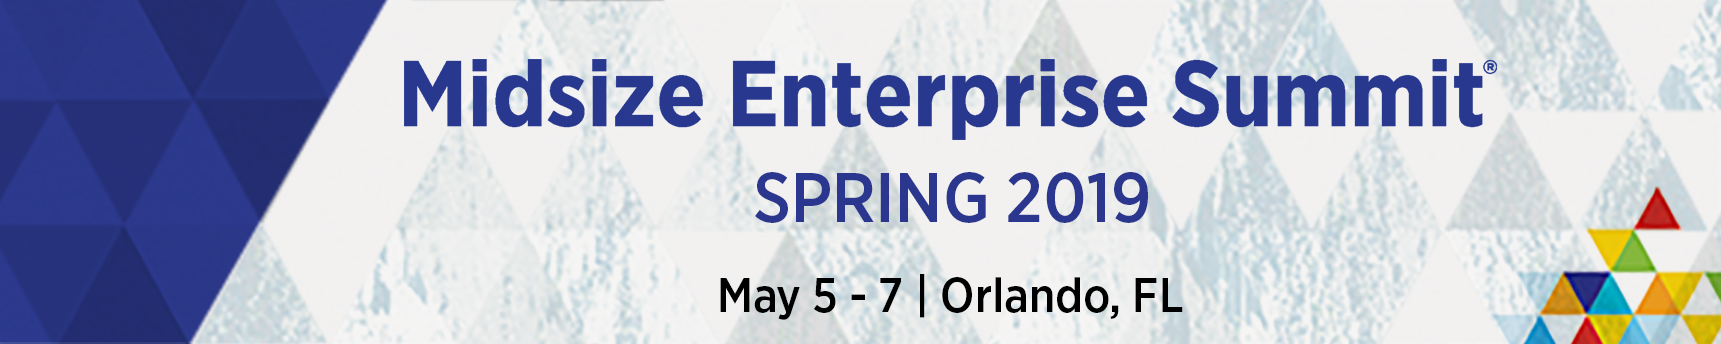 Midsize Enterprise Summit Spring 2019